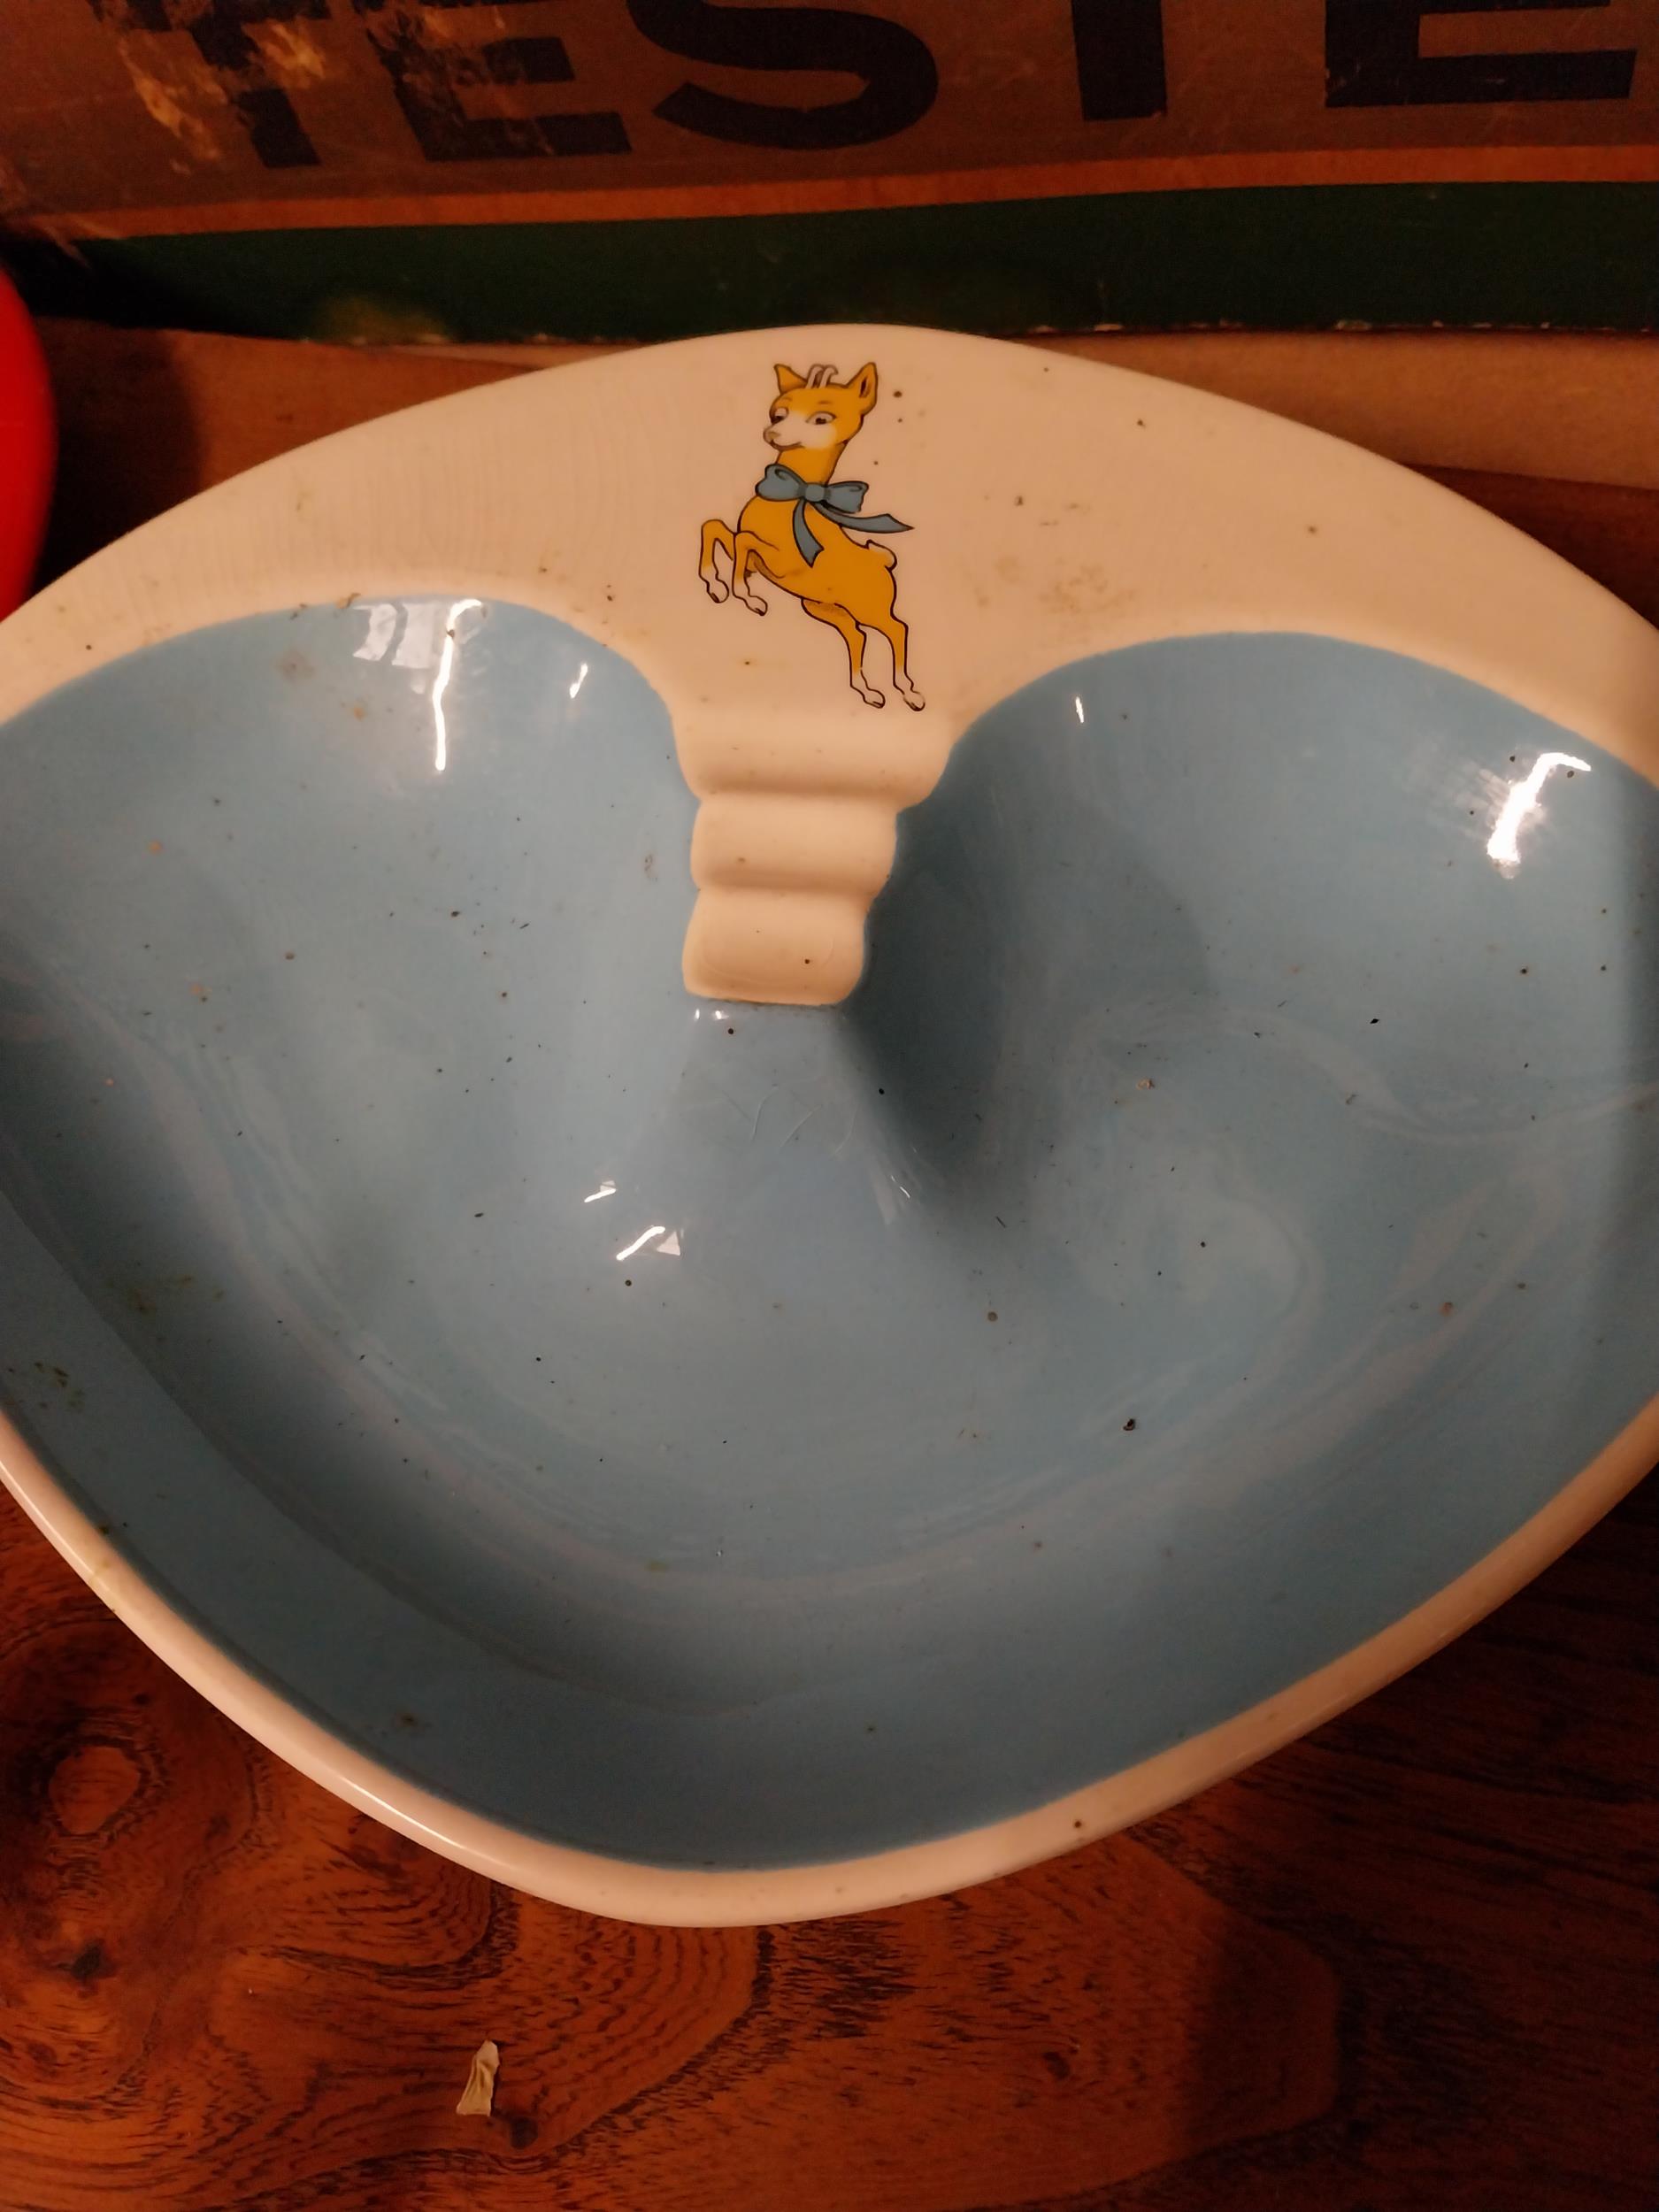 Pair of Babycham ceramic advertising ashtrays {5cm H x 29cm W x 24cm D}. - Image 2 of 2